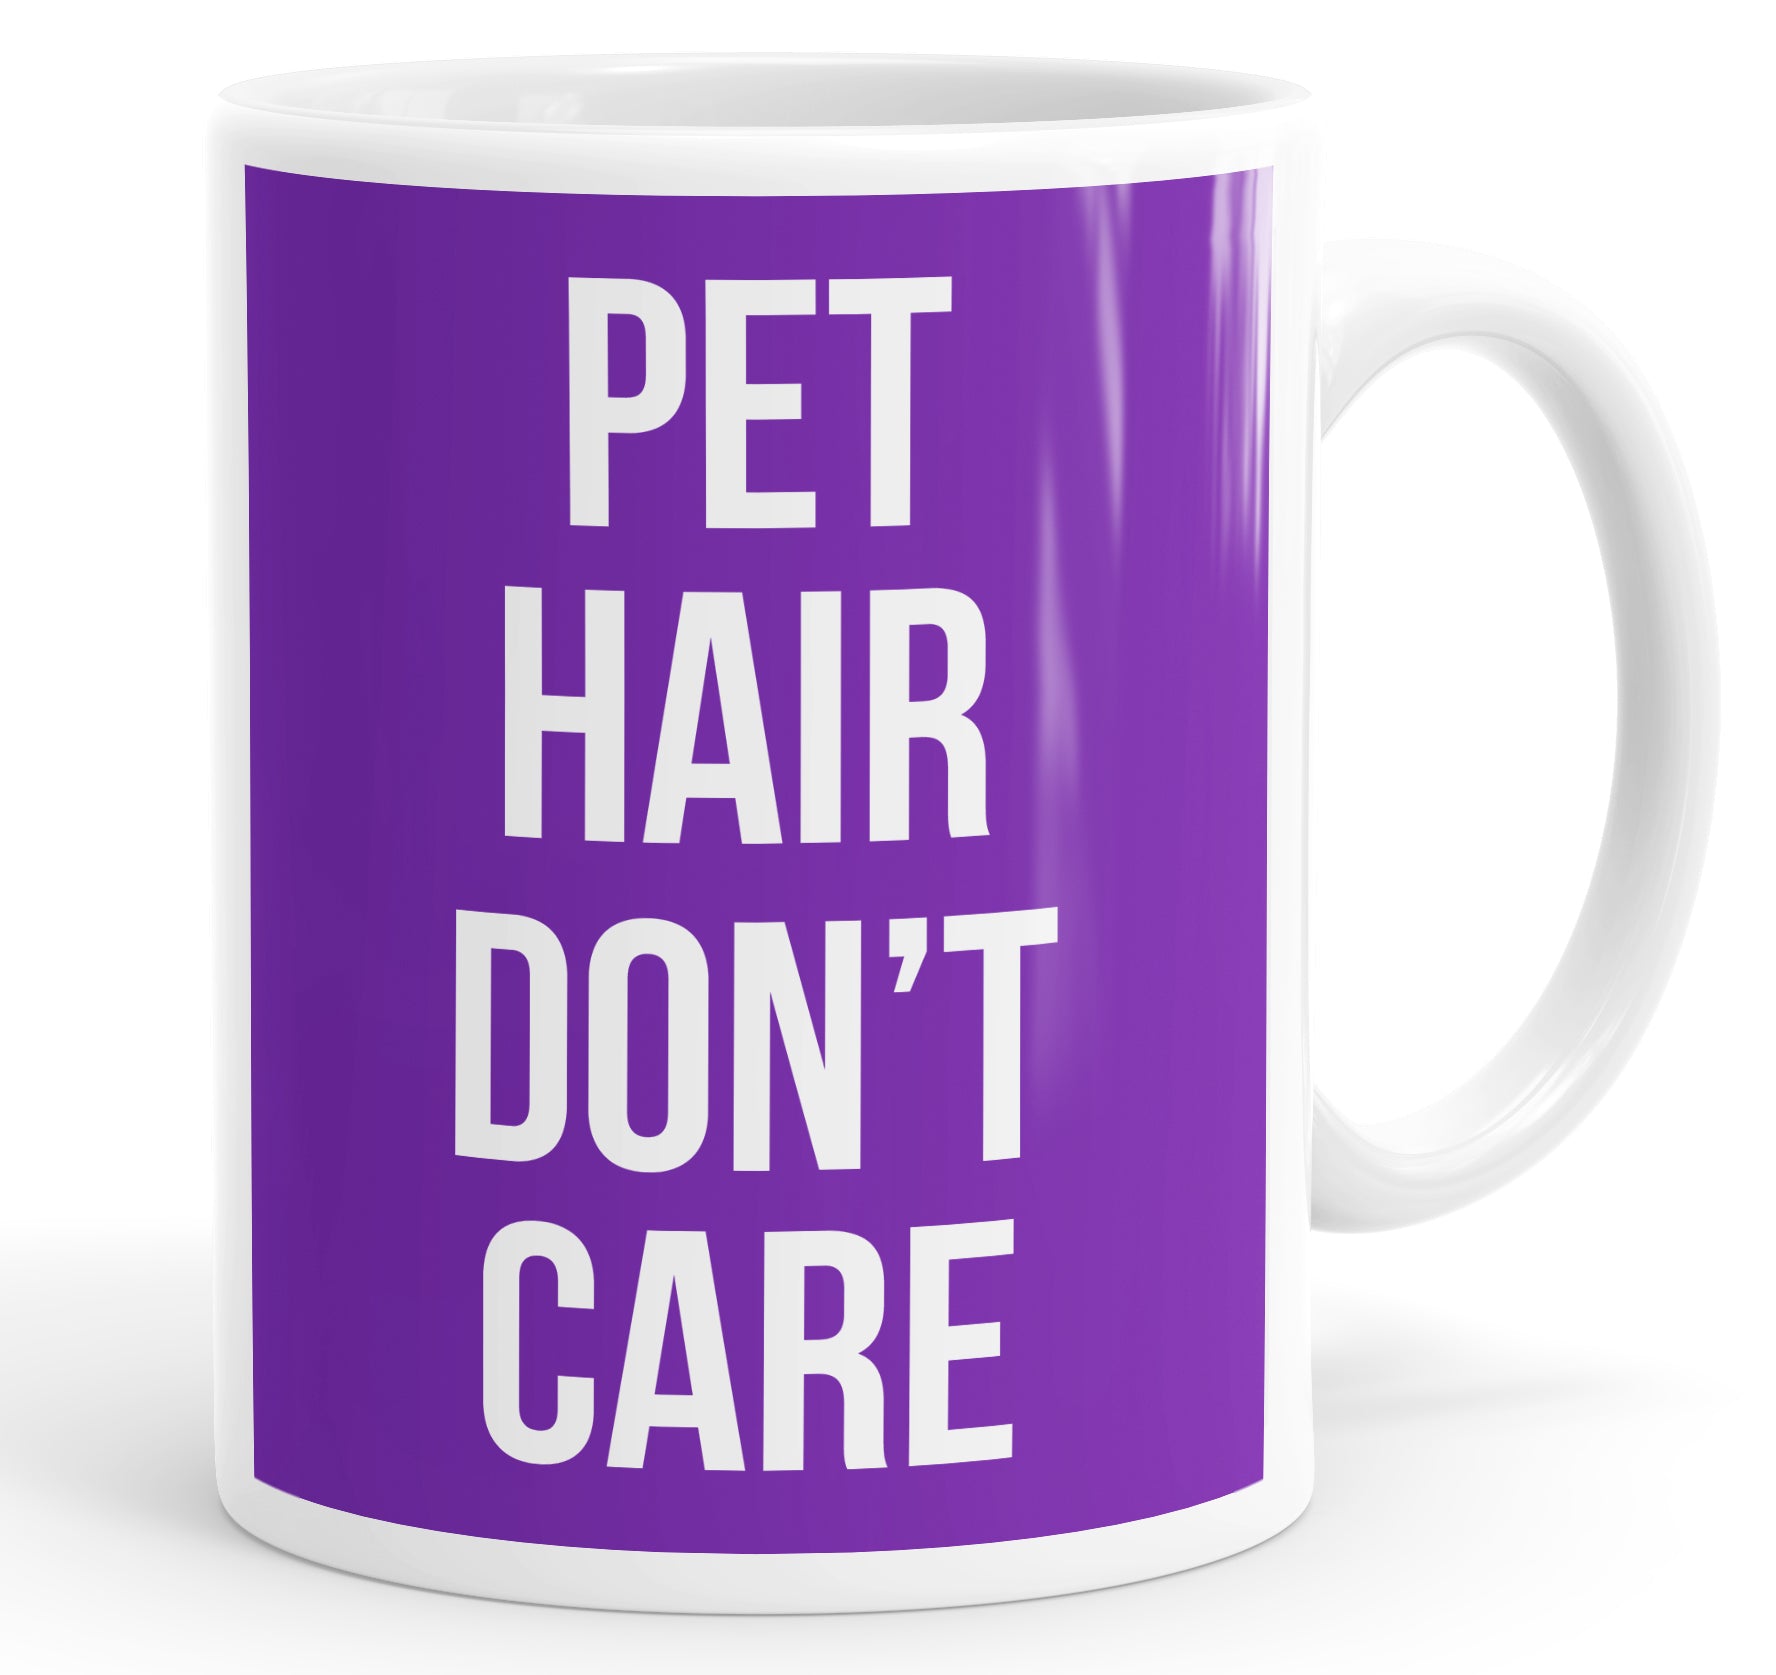 Pet Hair Don't Care Funny Mug Cup